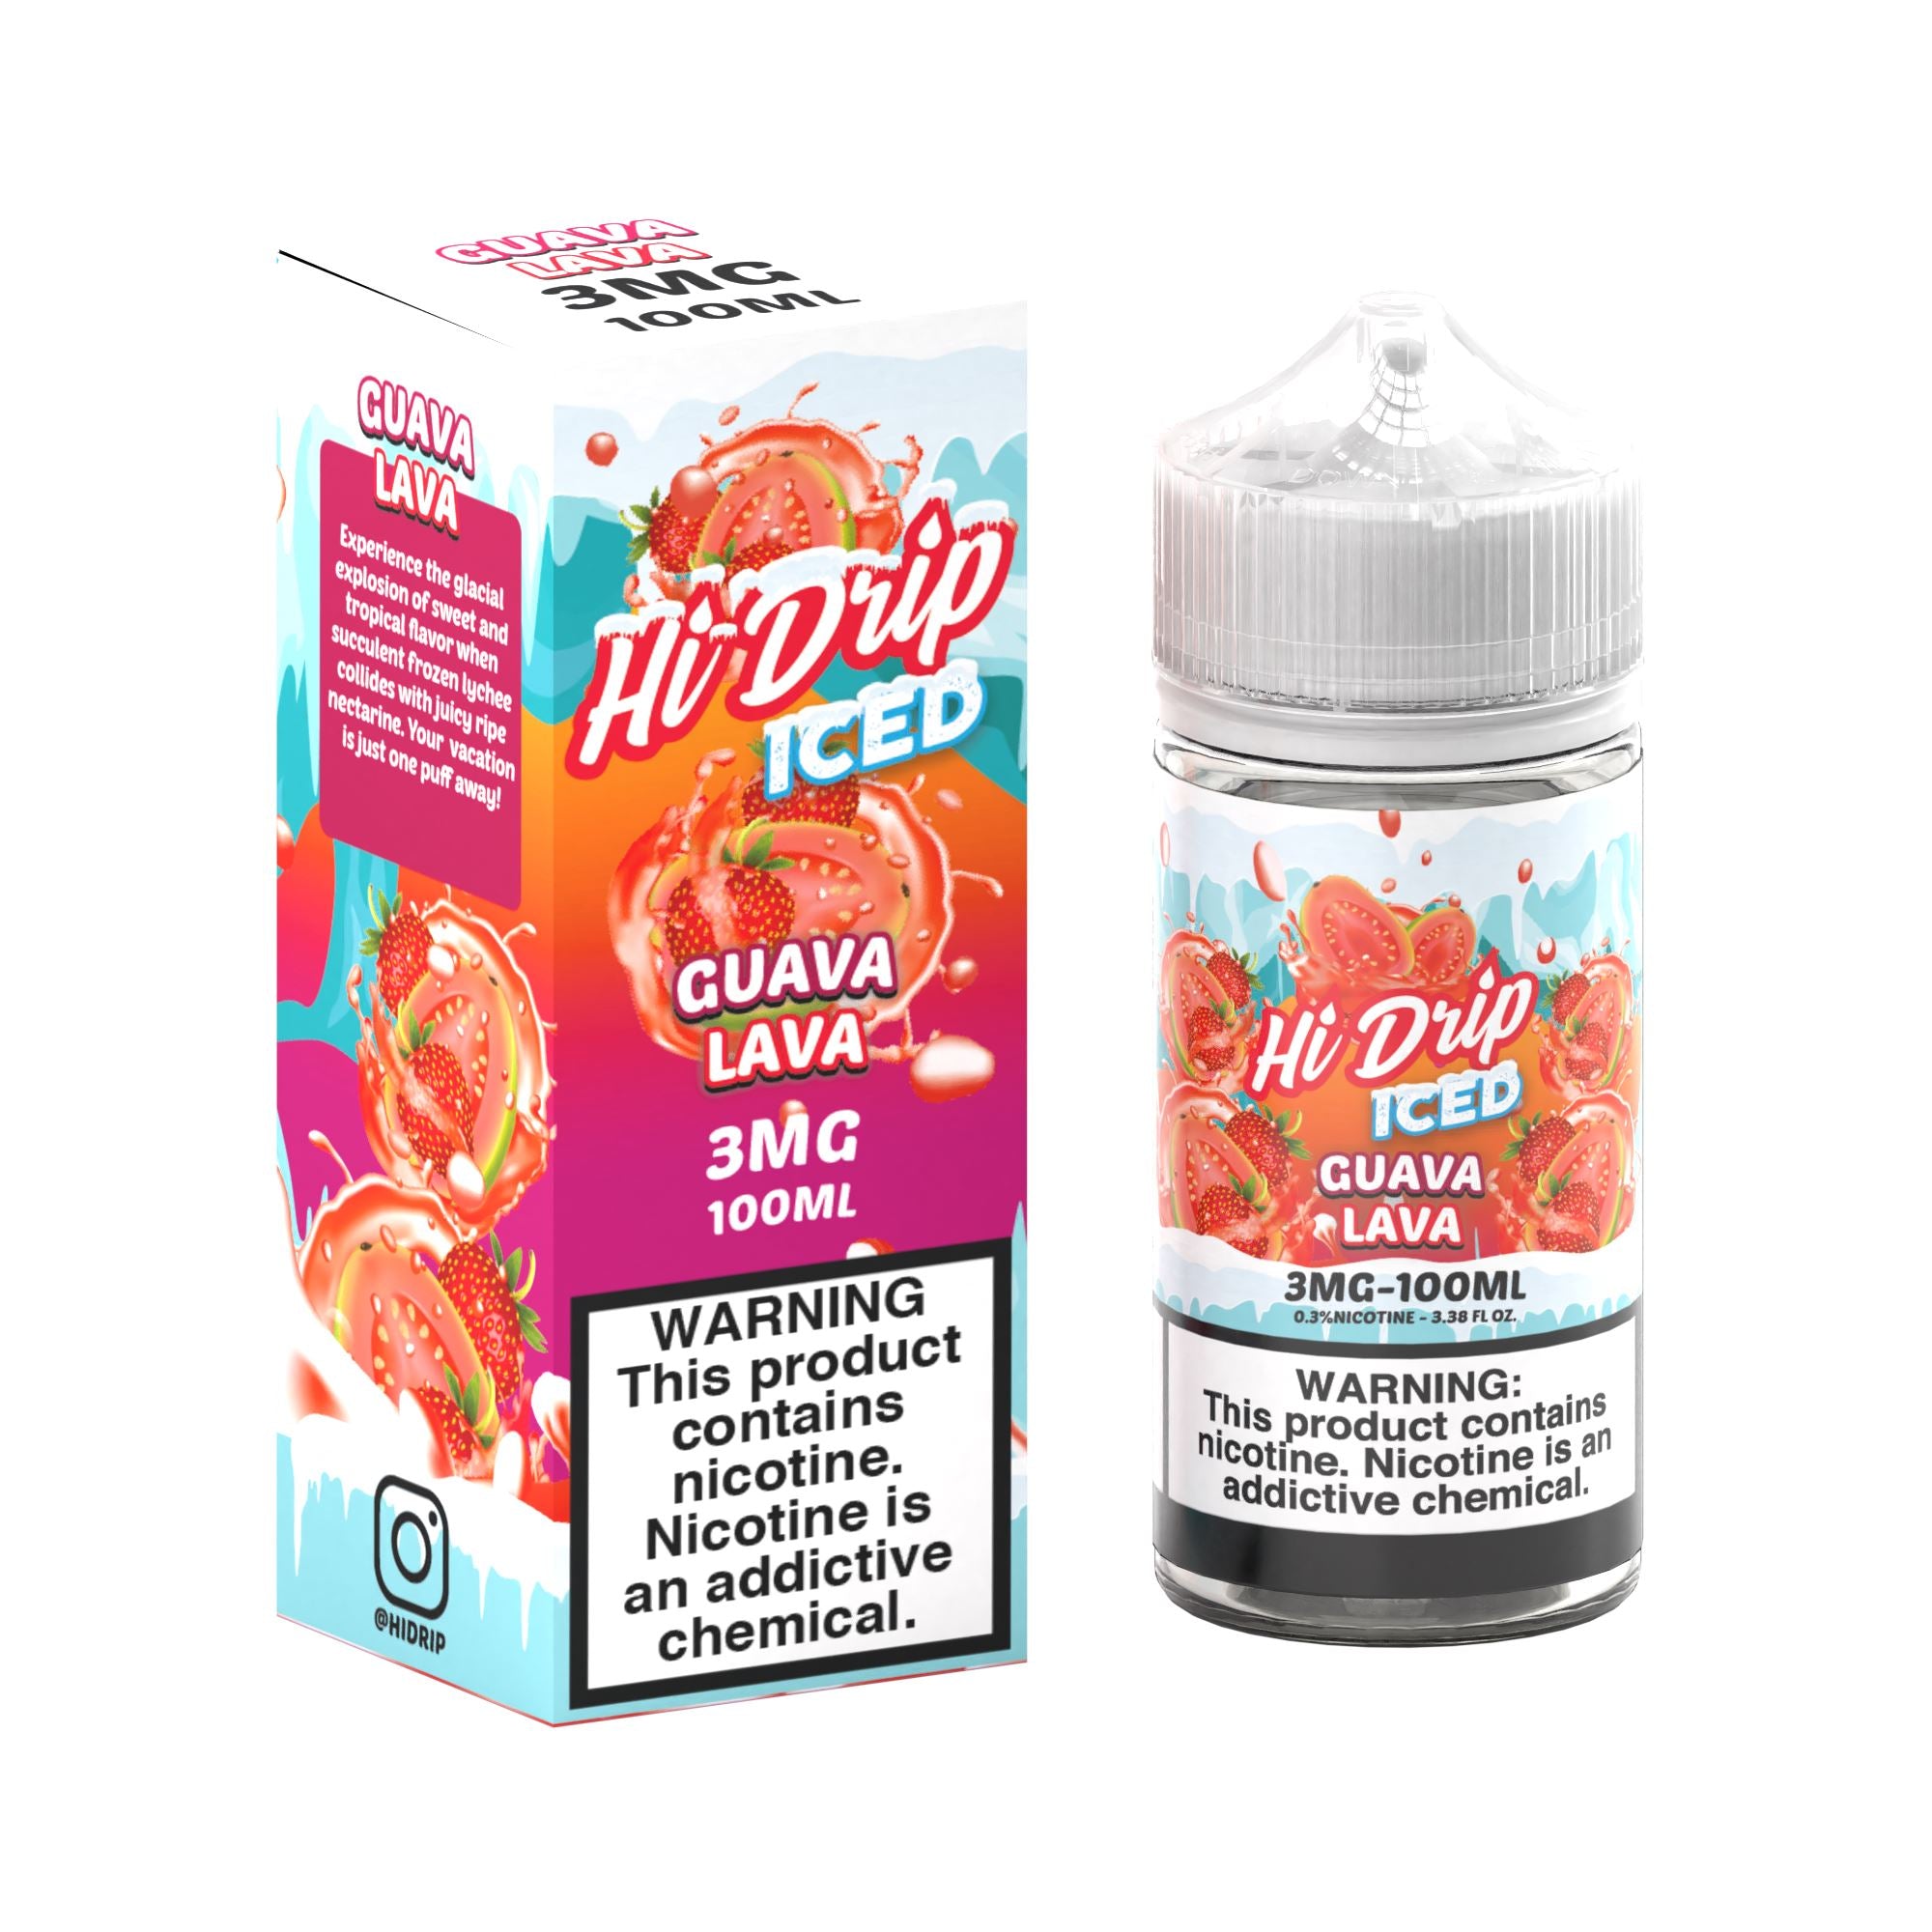 Hi-Drip ICED - Guava Lava - Vapoureyes